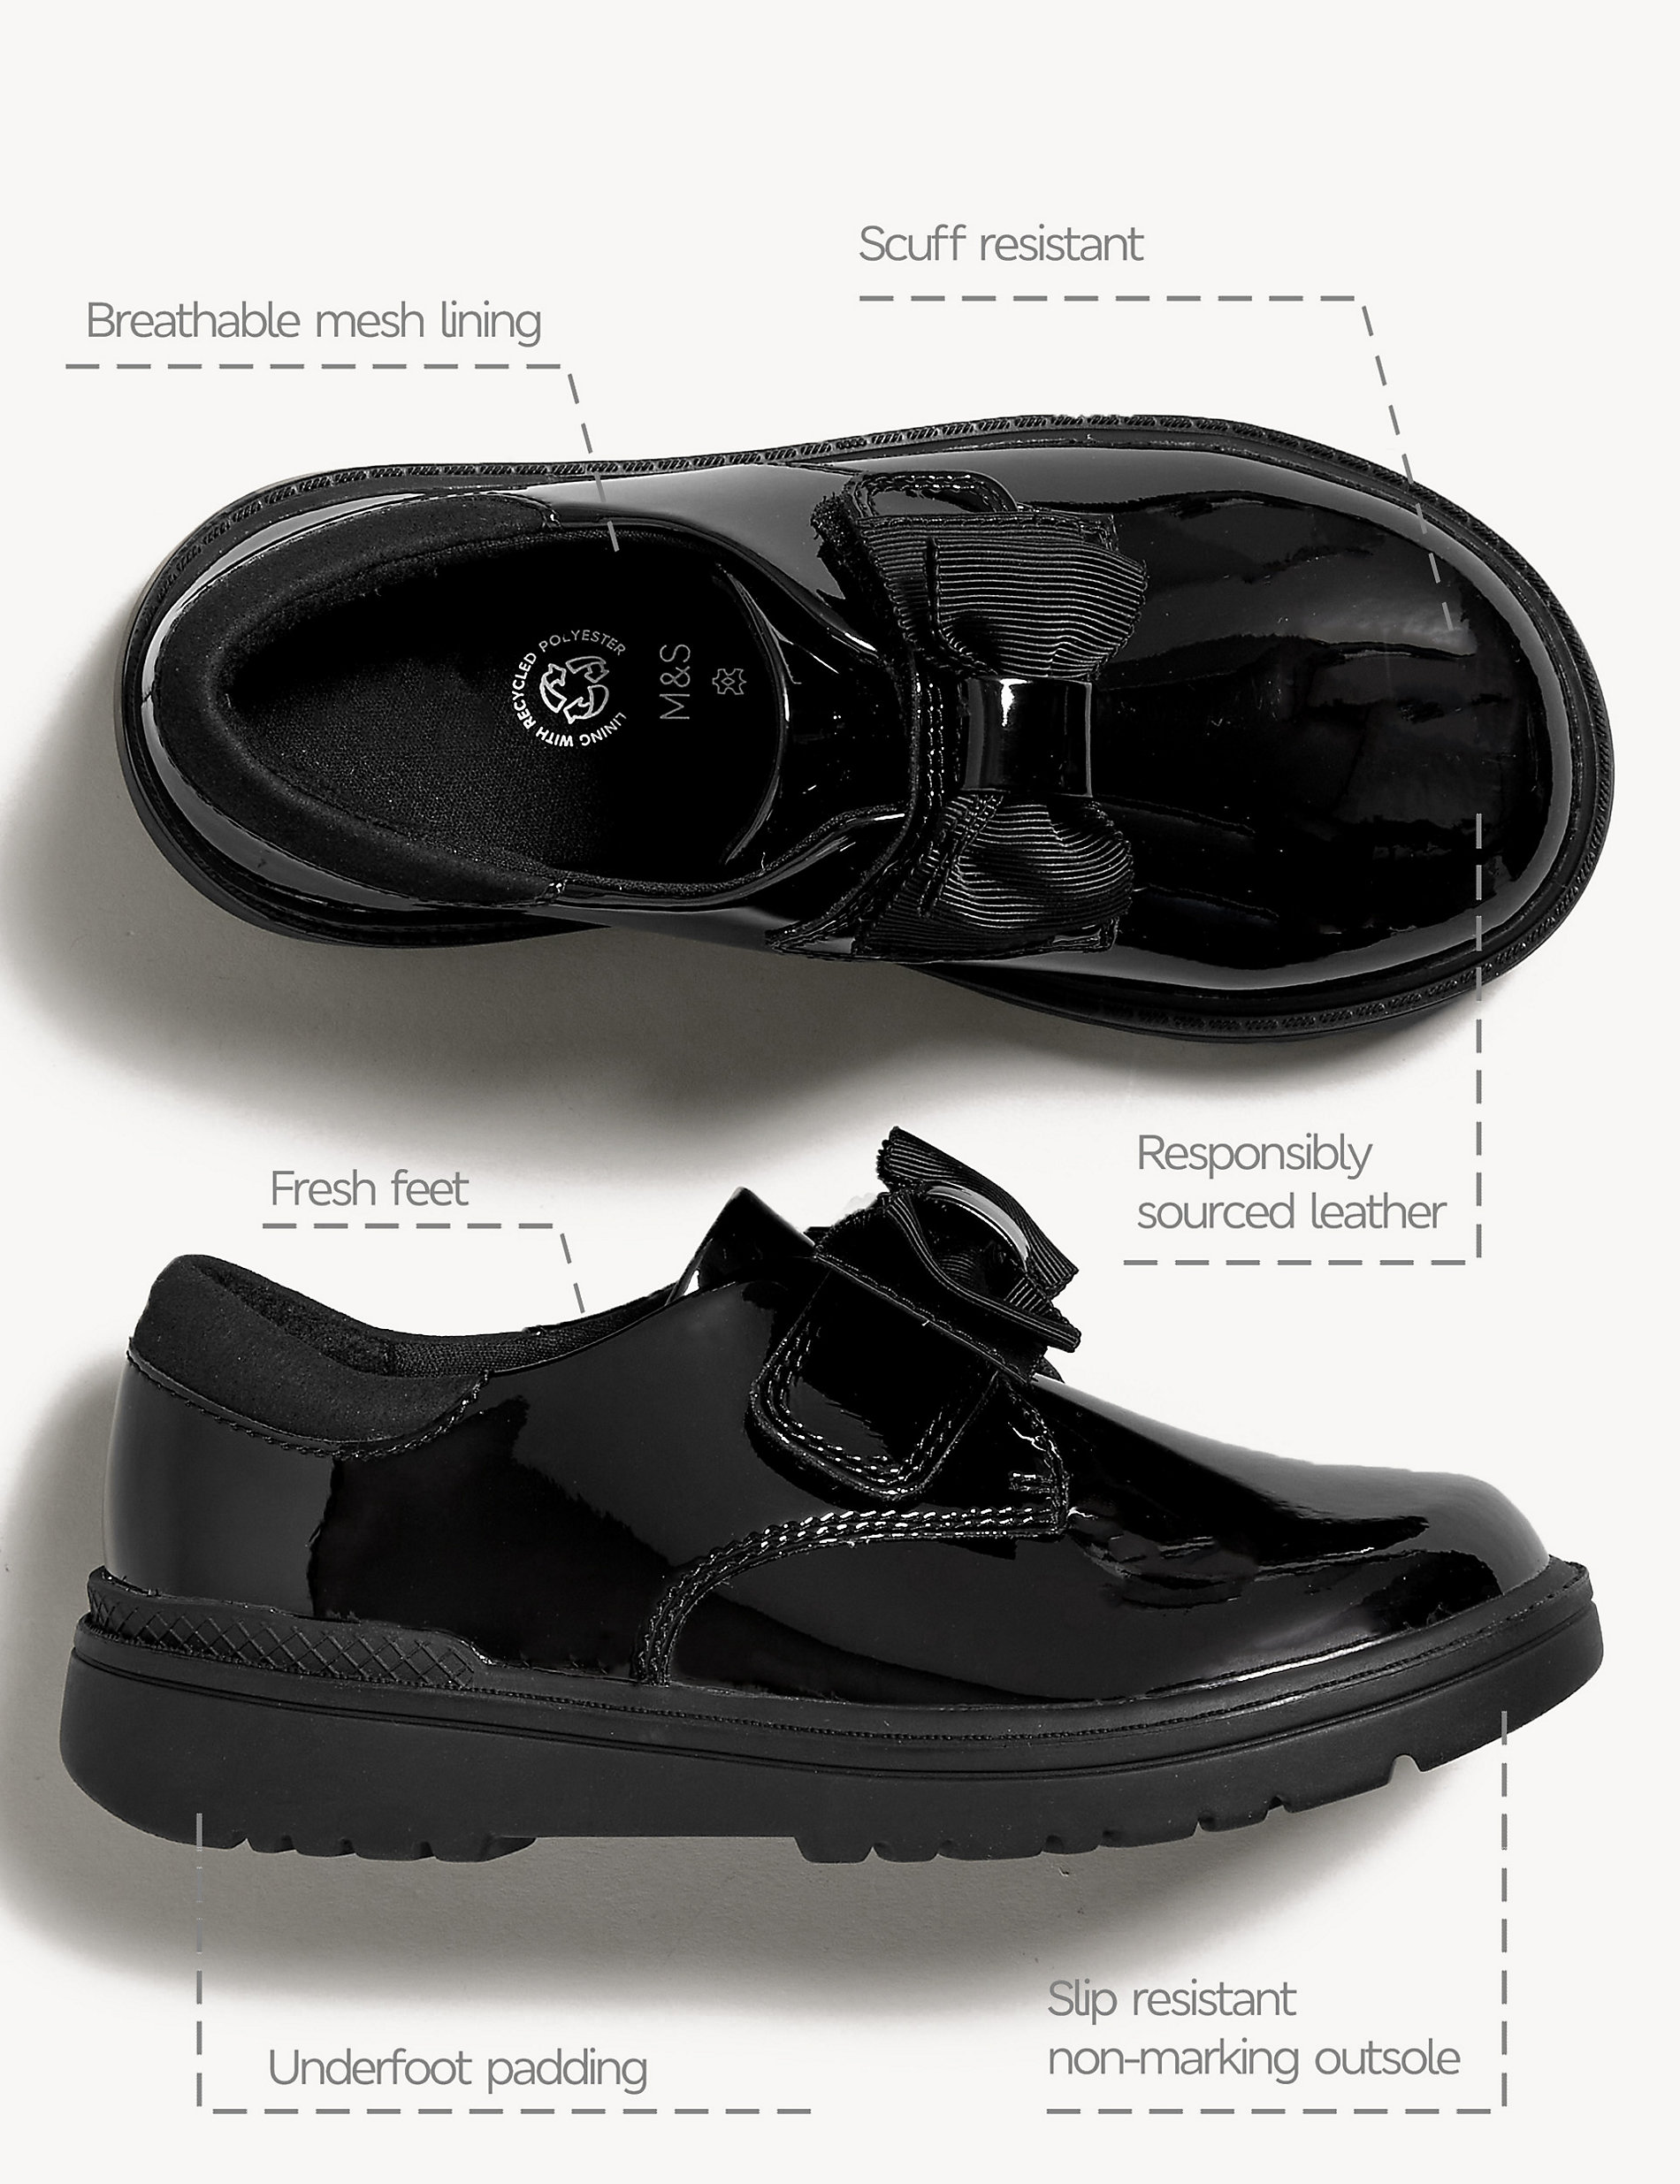 Garçons terme Black leater School Chaussures Taille UK Kids 11,new avec boite 